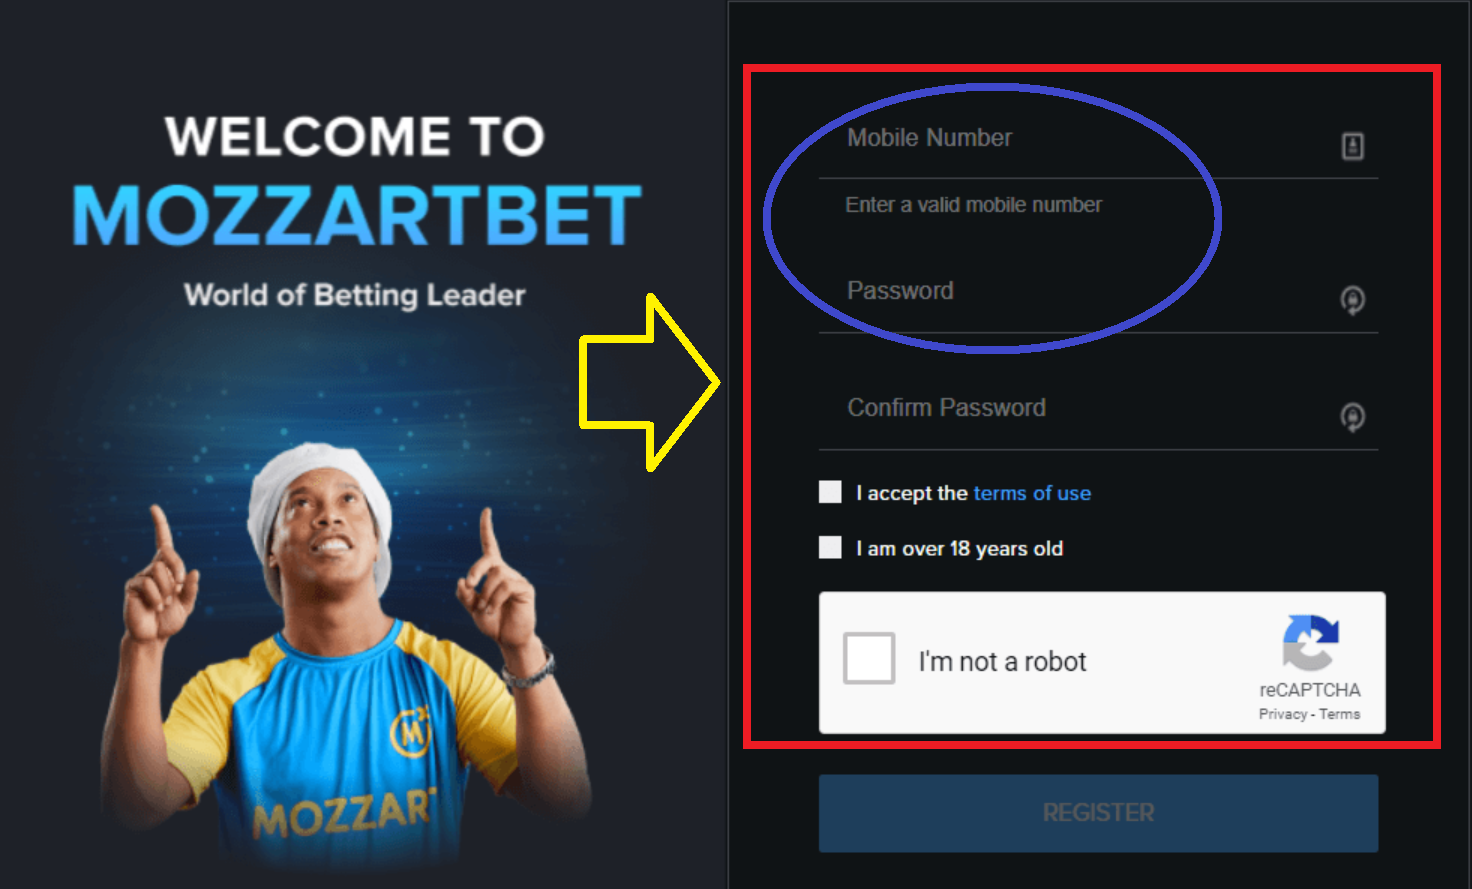 How to register on Mozzart Bet Kenya’s website?